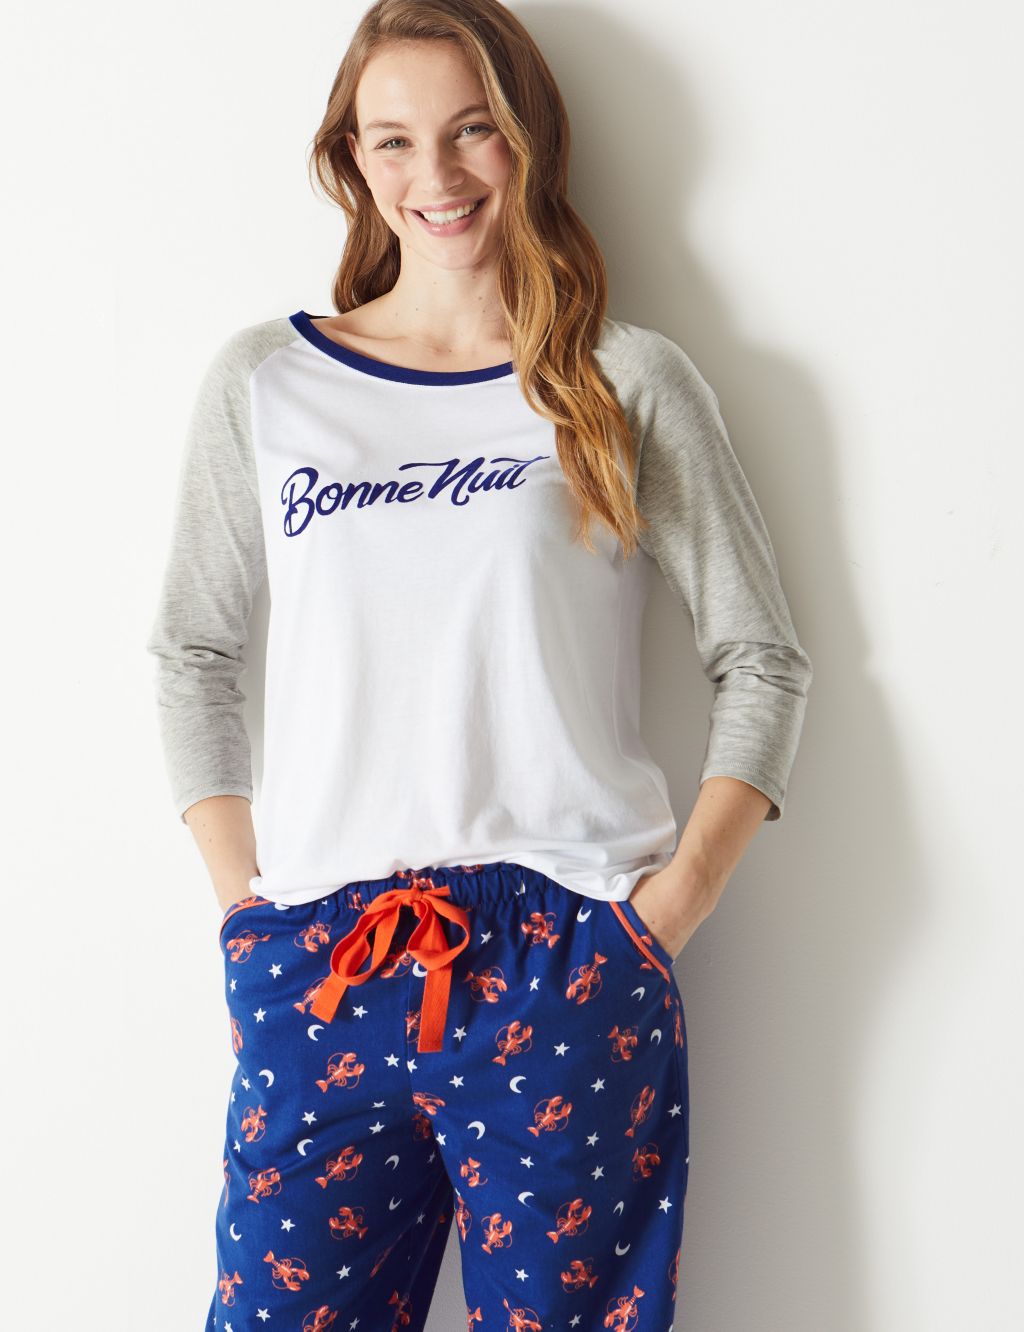 ‘Bonne Nuit’ Slogan Short Sleeve Pyjama Top 3 of 4